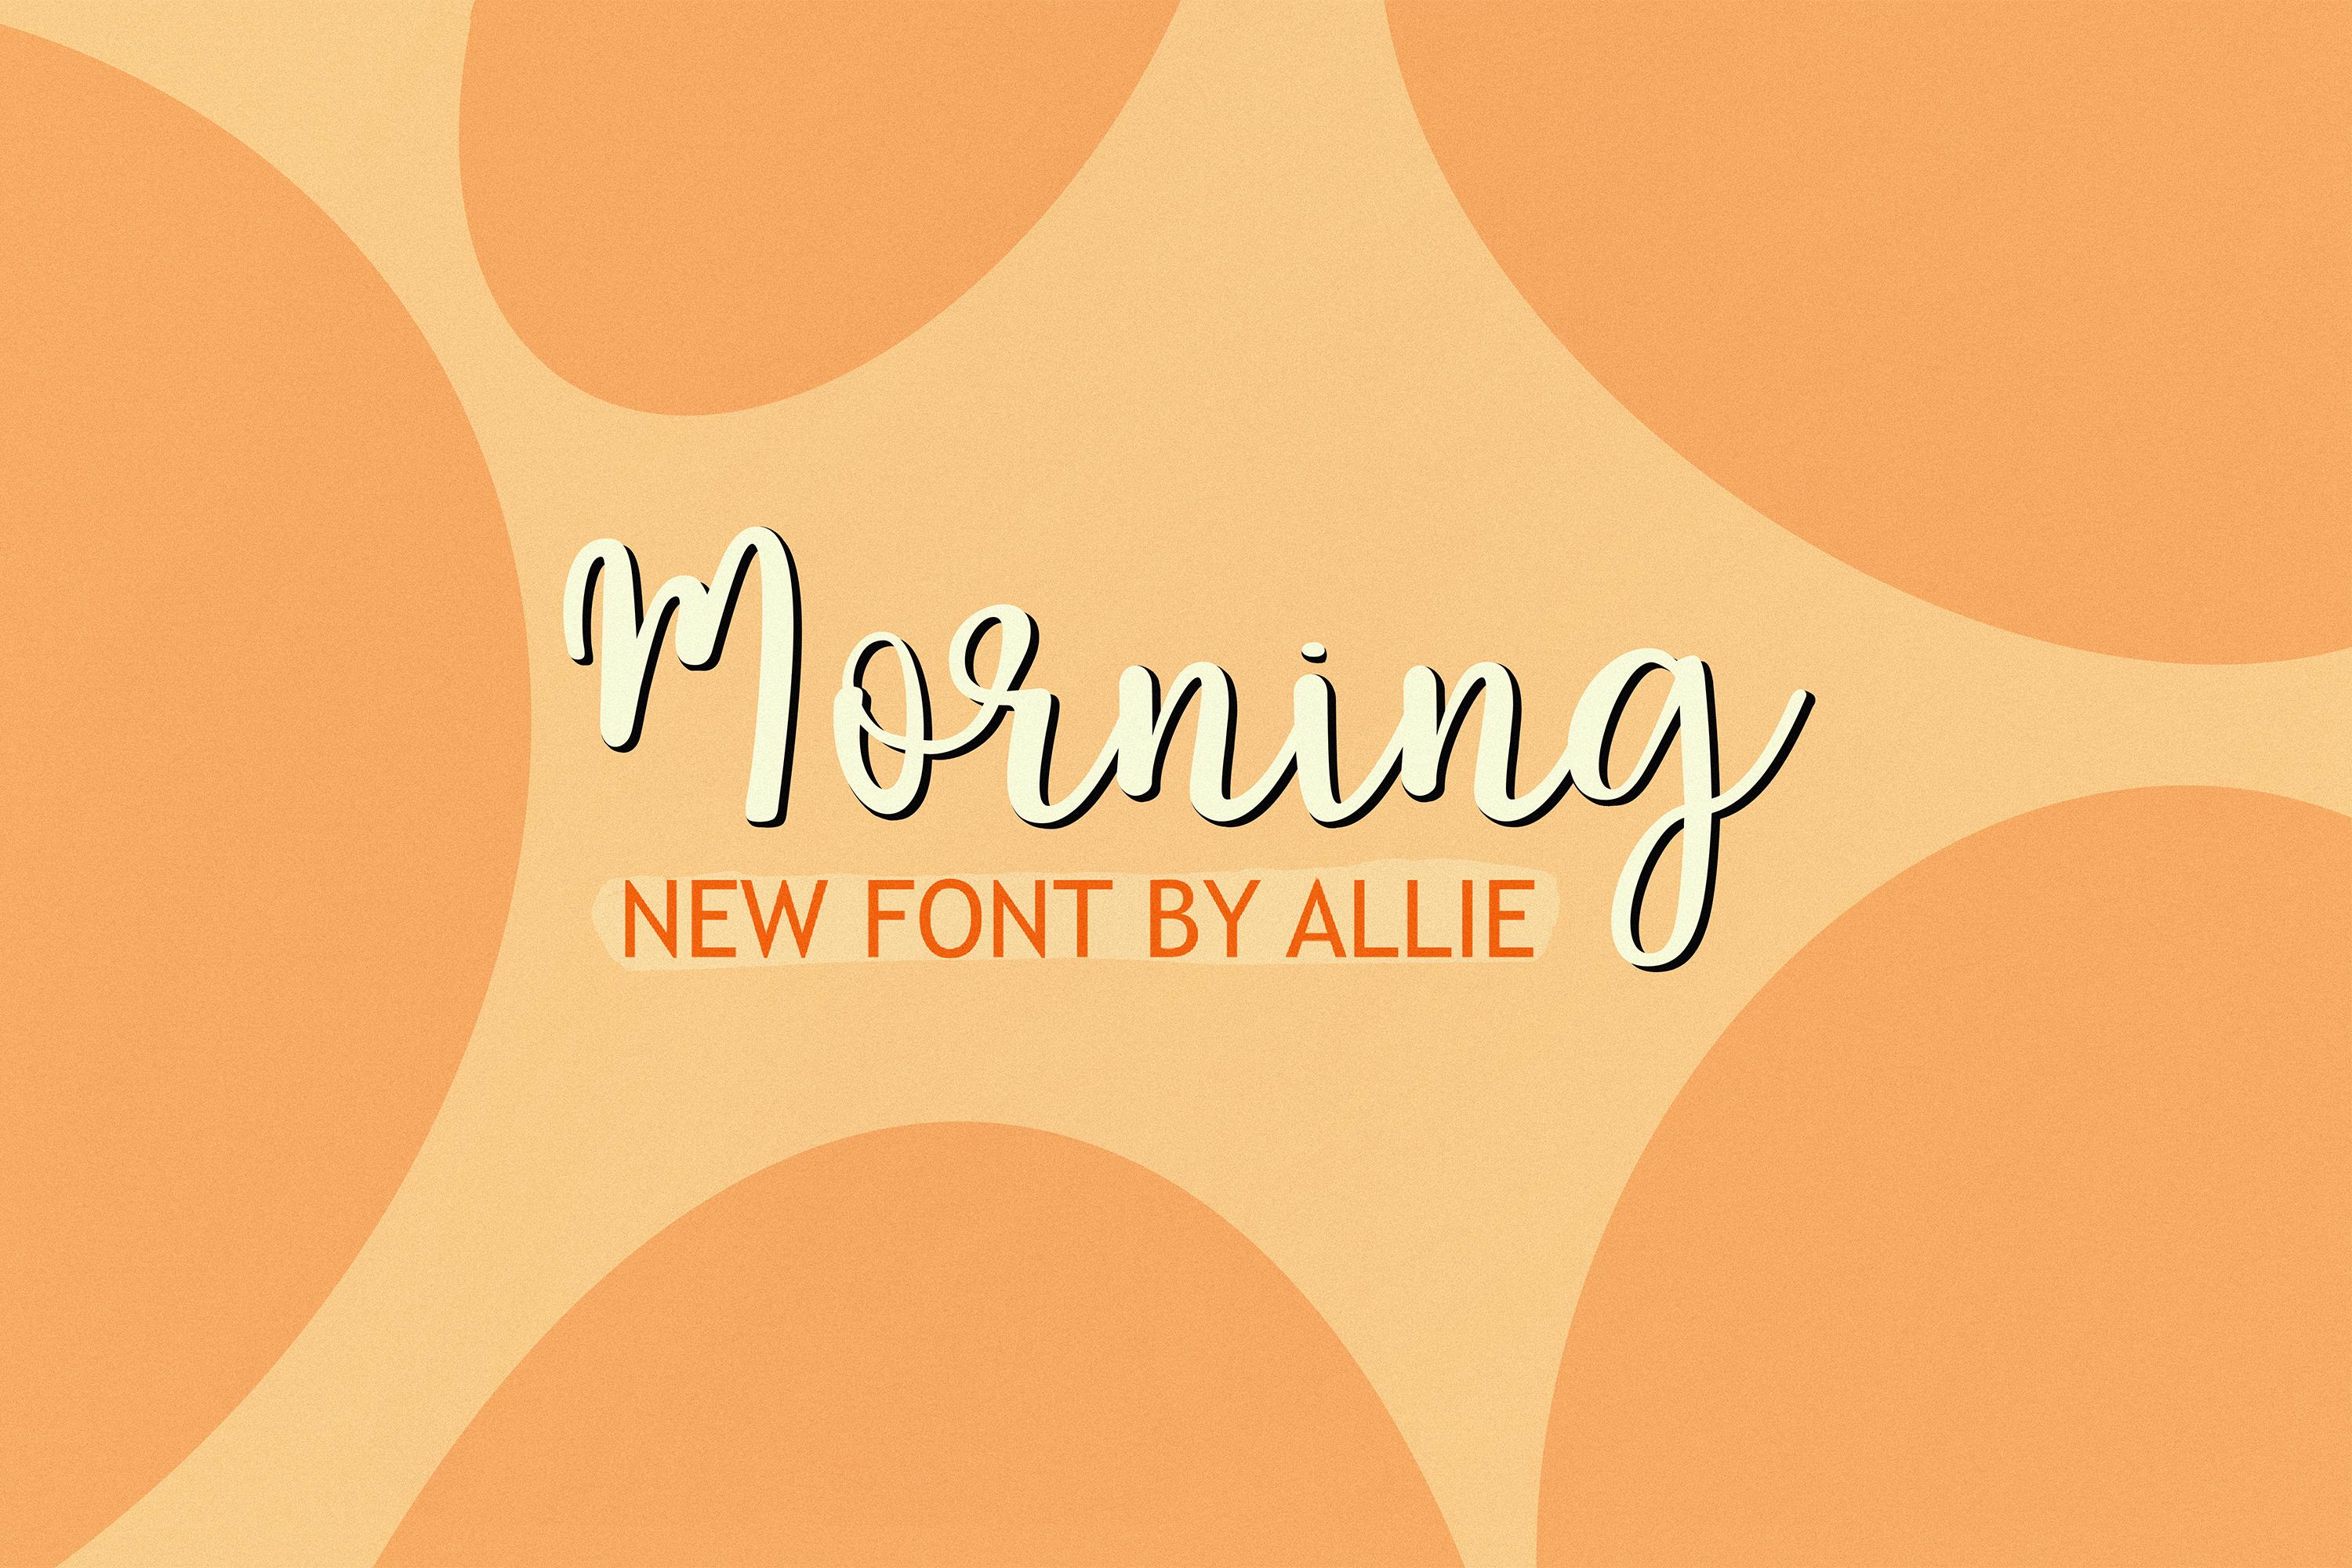 Morning Font